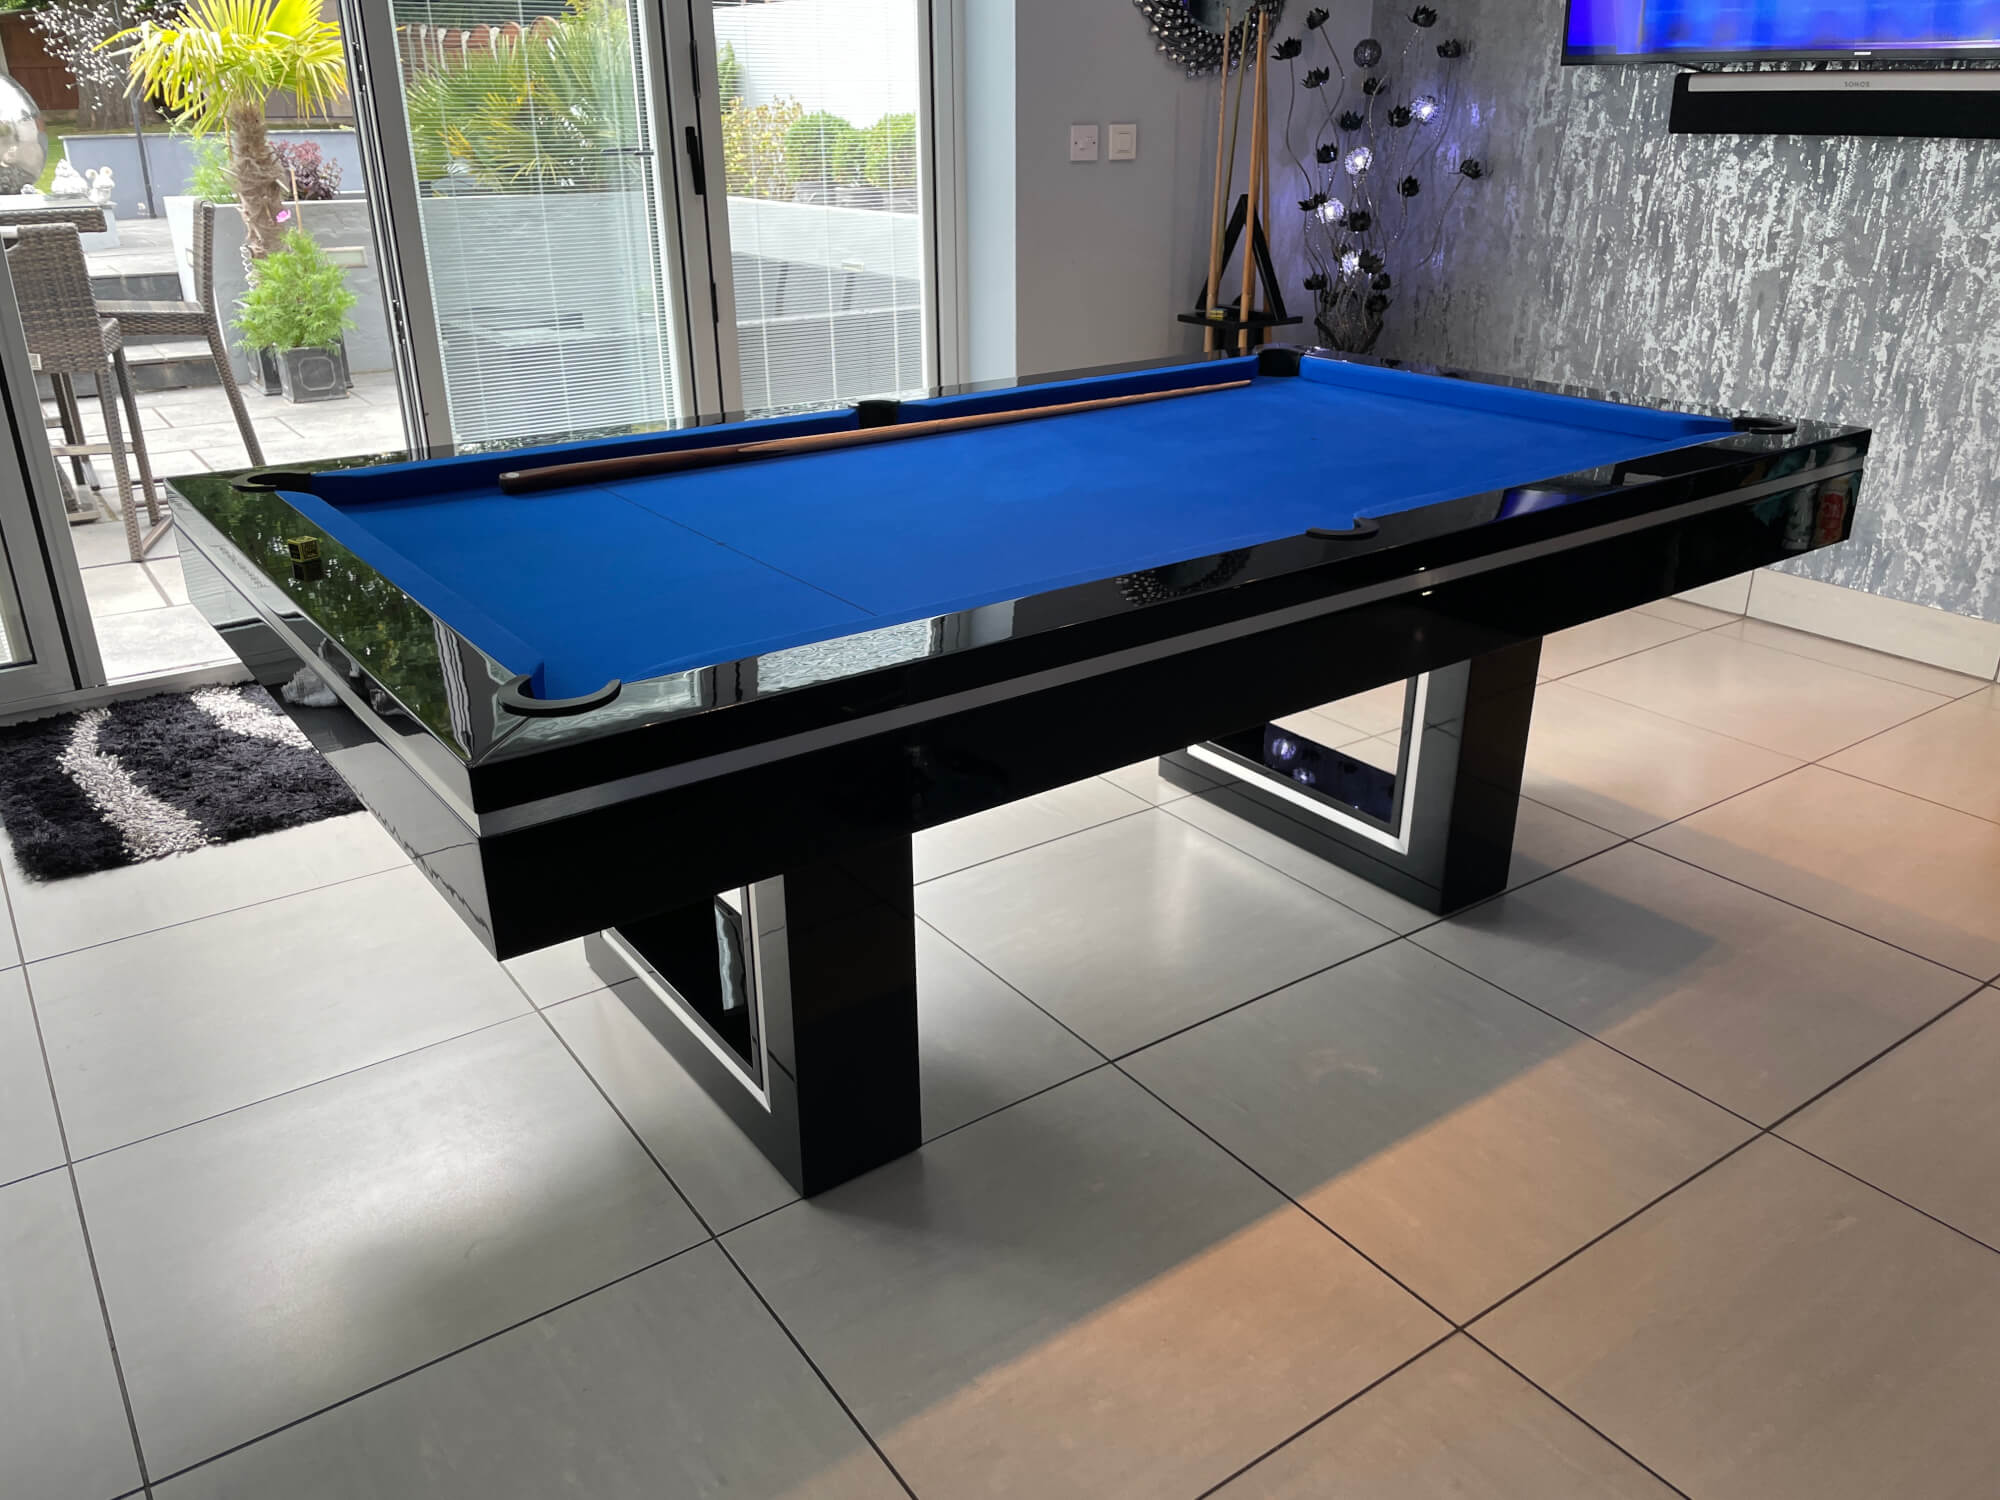 The Monaco Slate Bed Pool Table | Liberty Games